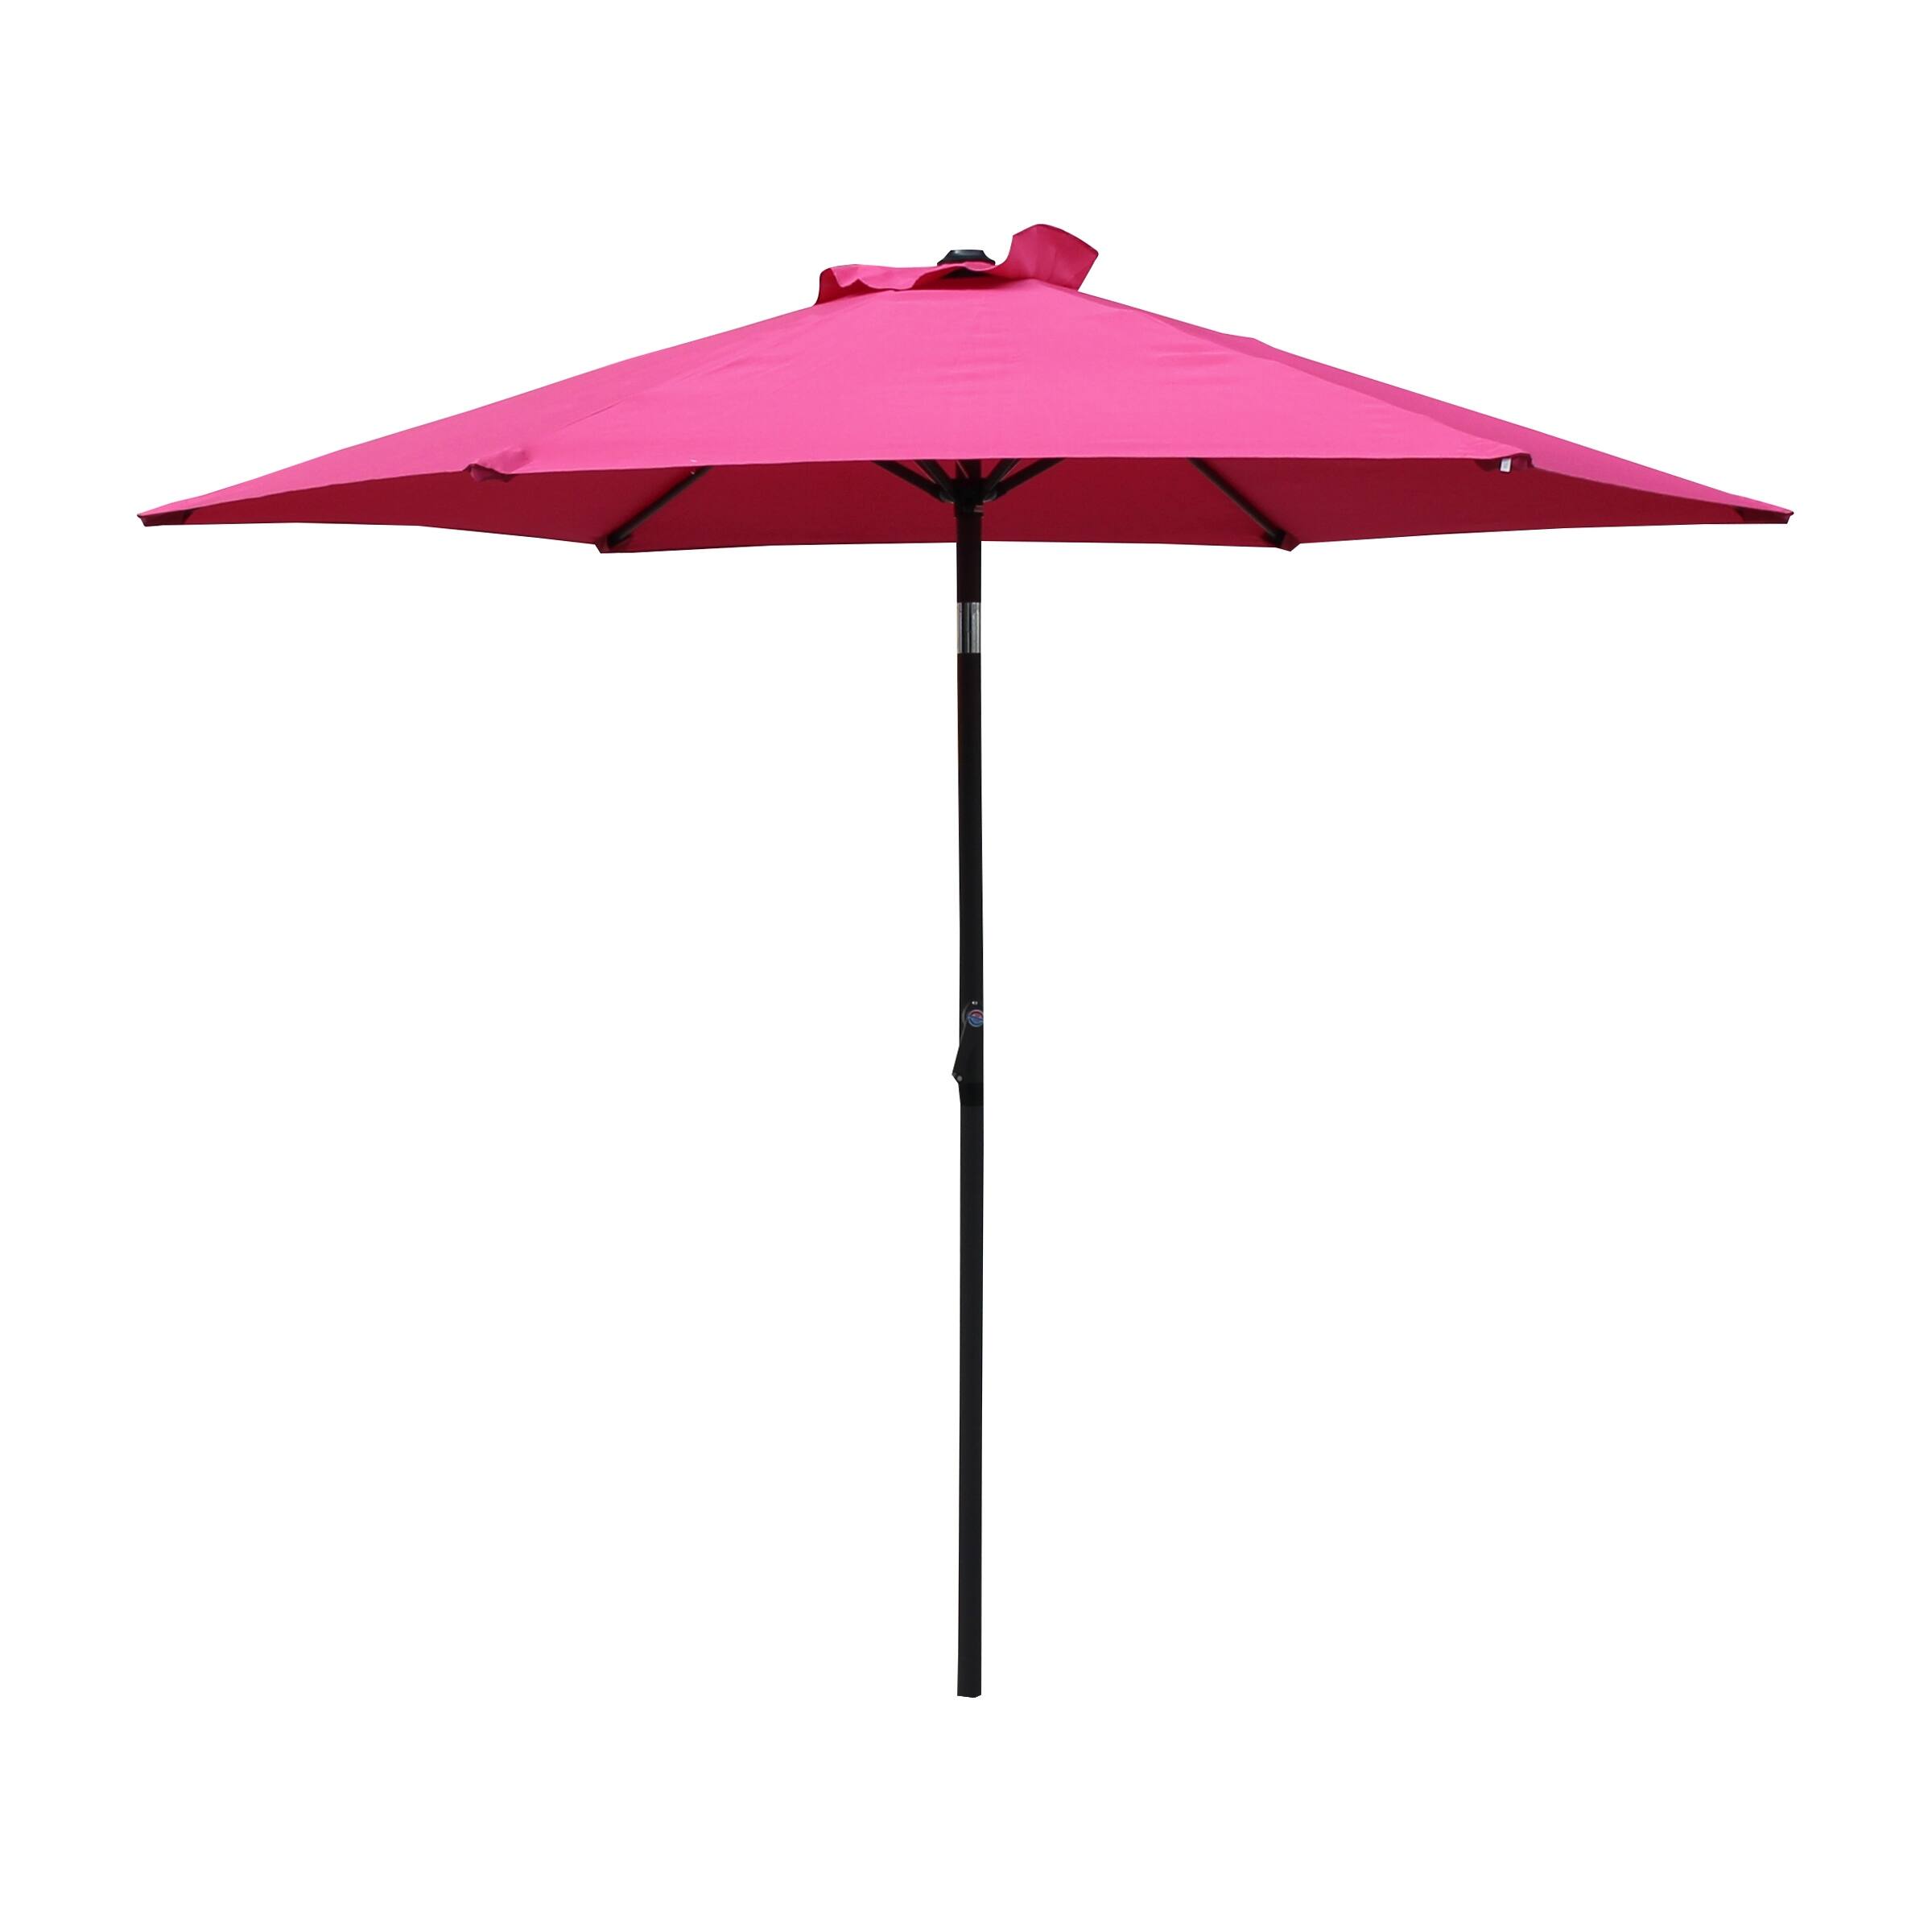 St. Kitts 8-foot Crank-and-Tilt Patio Umbrella